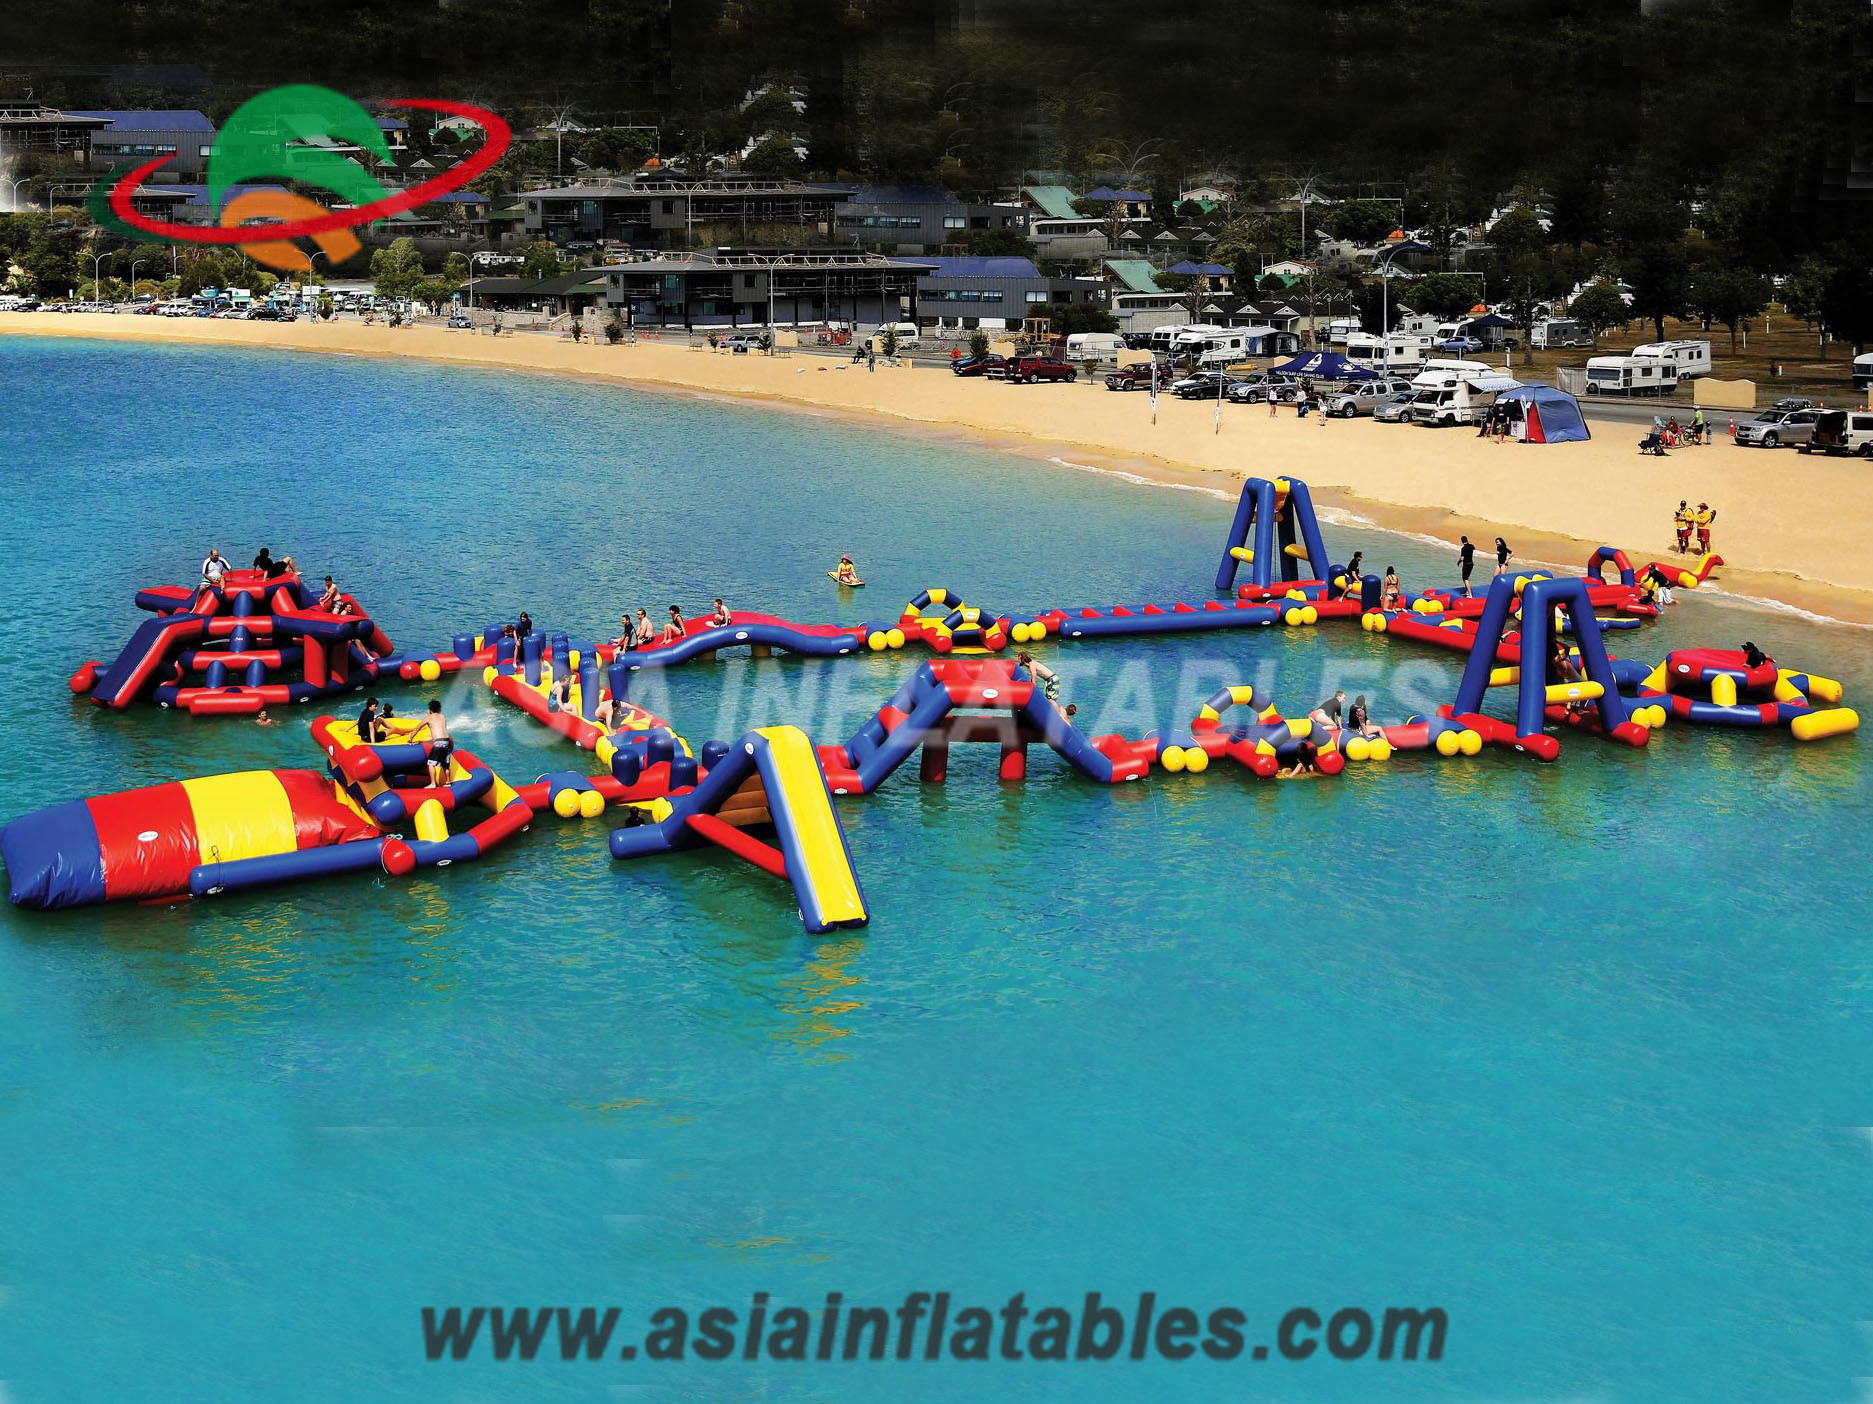 The Biggest Inflatable Water Park Floating Island Platform